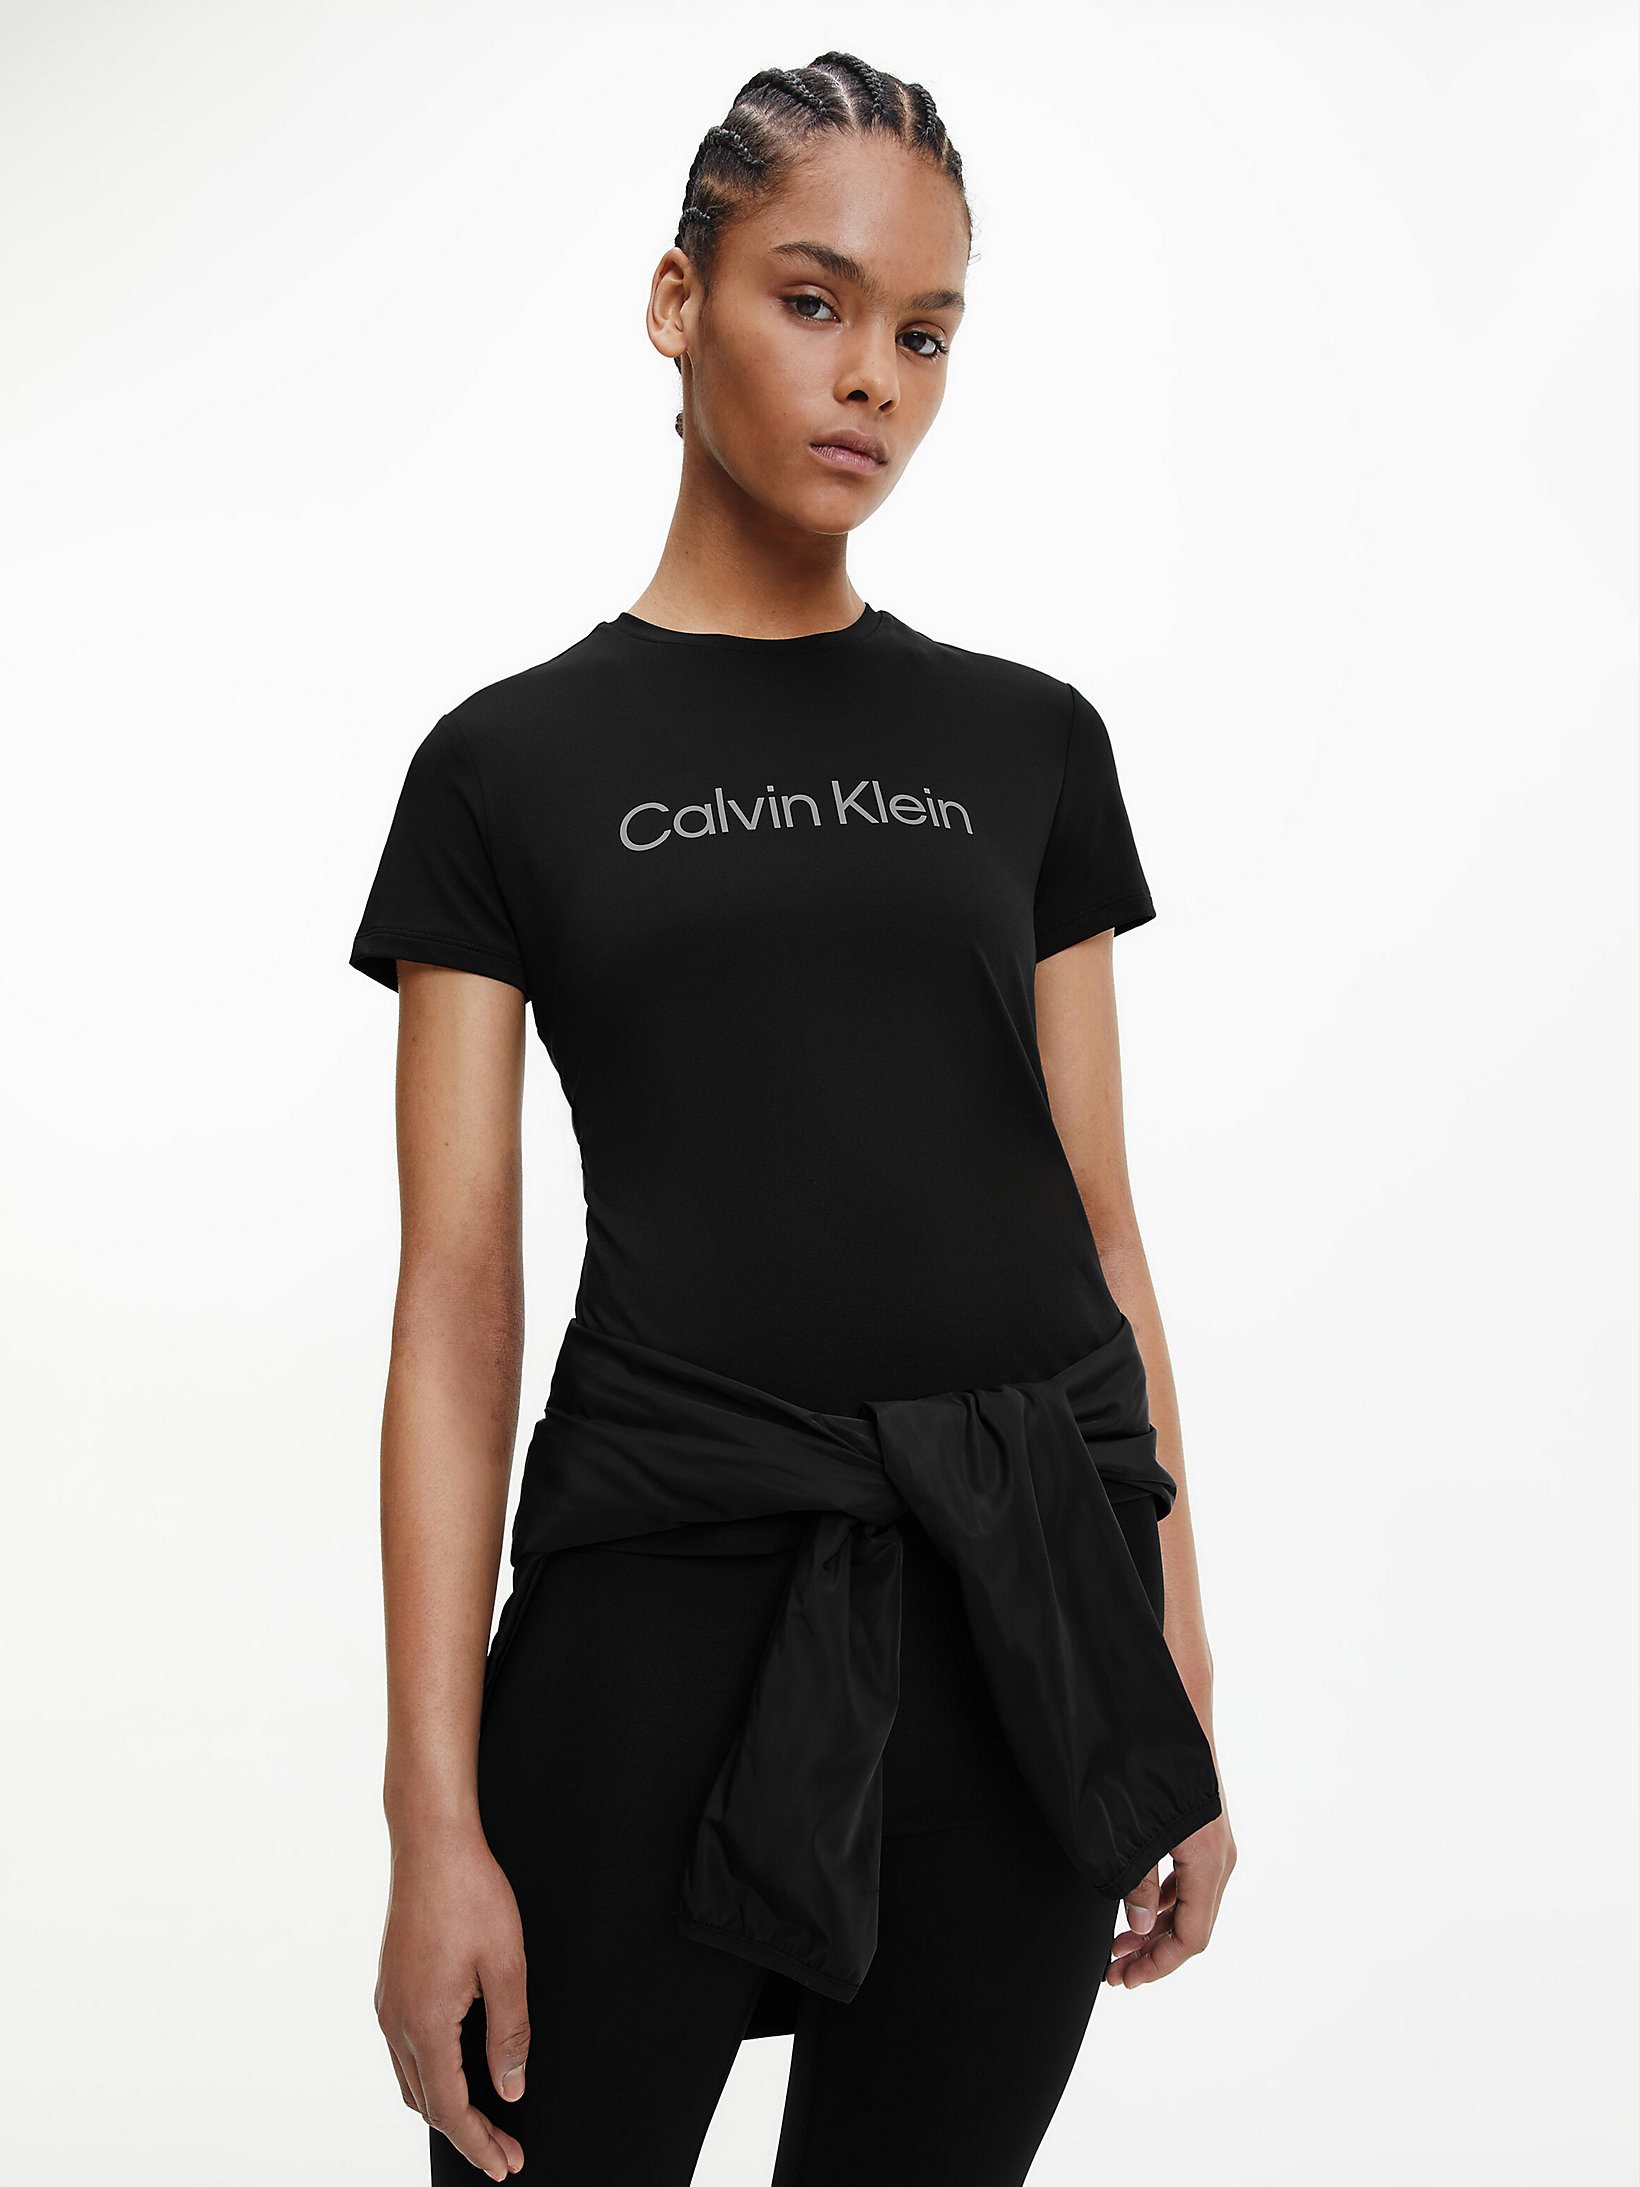 Black Beauty > Спортивная футболка > undefined Женщины - Calvin Klein